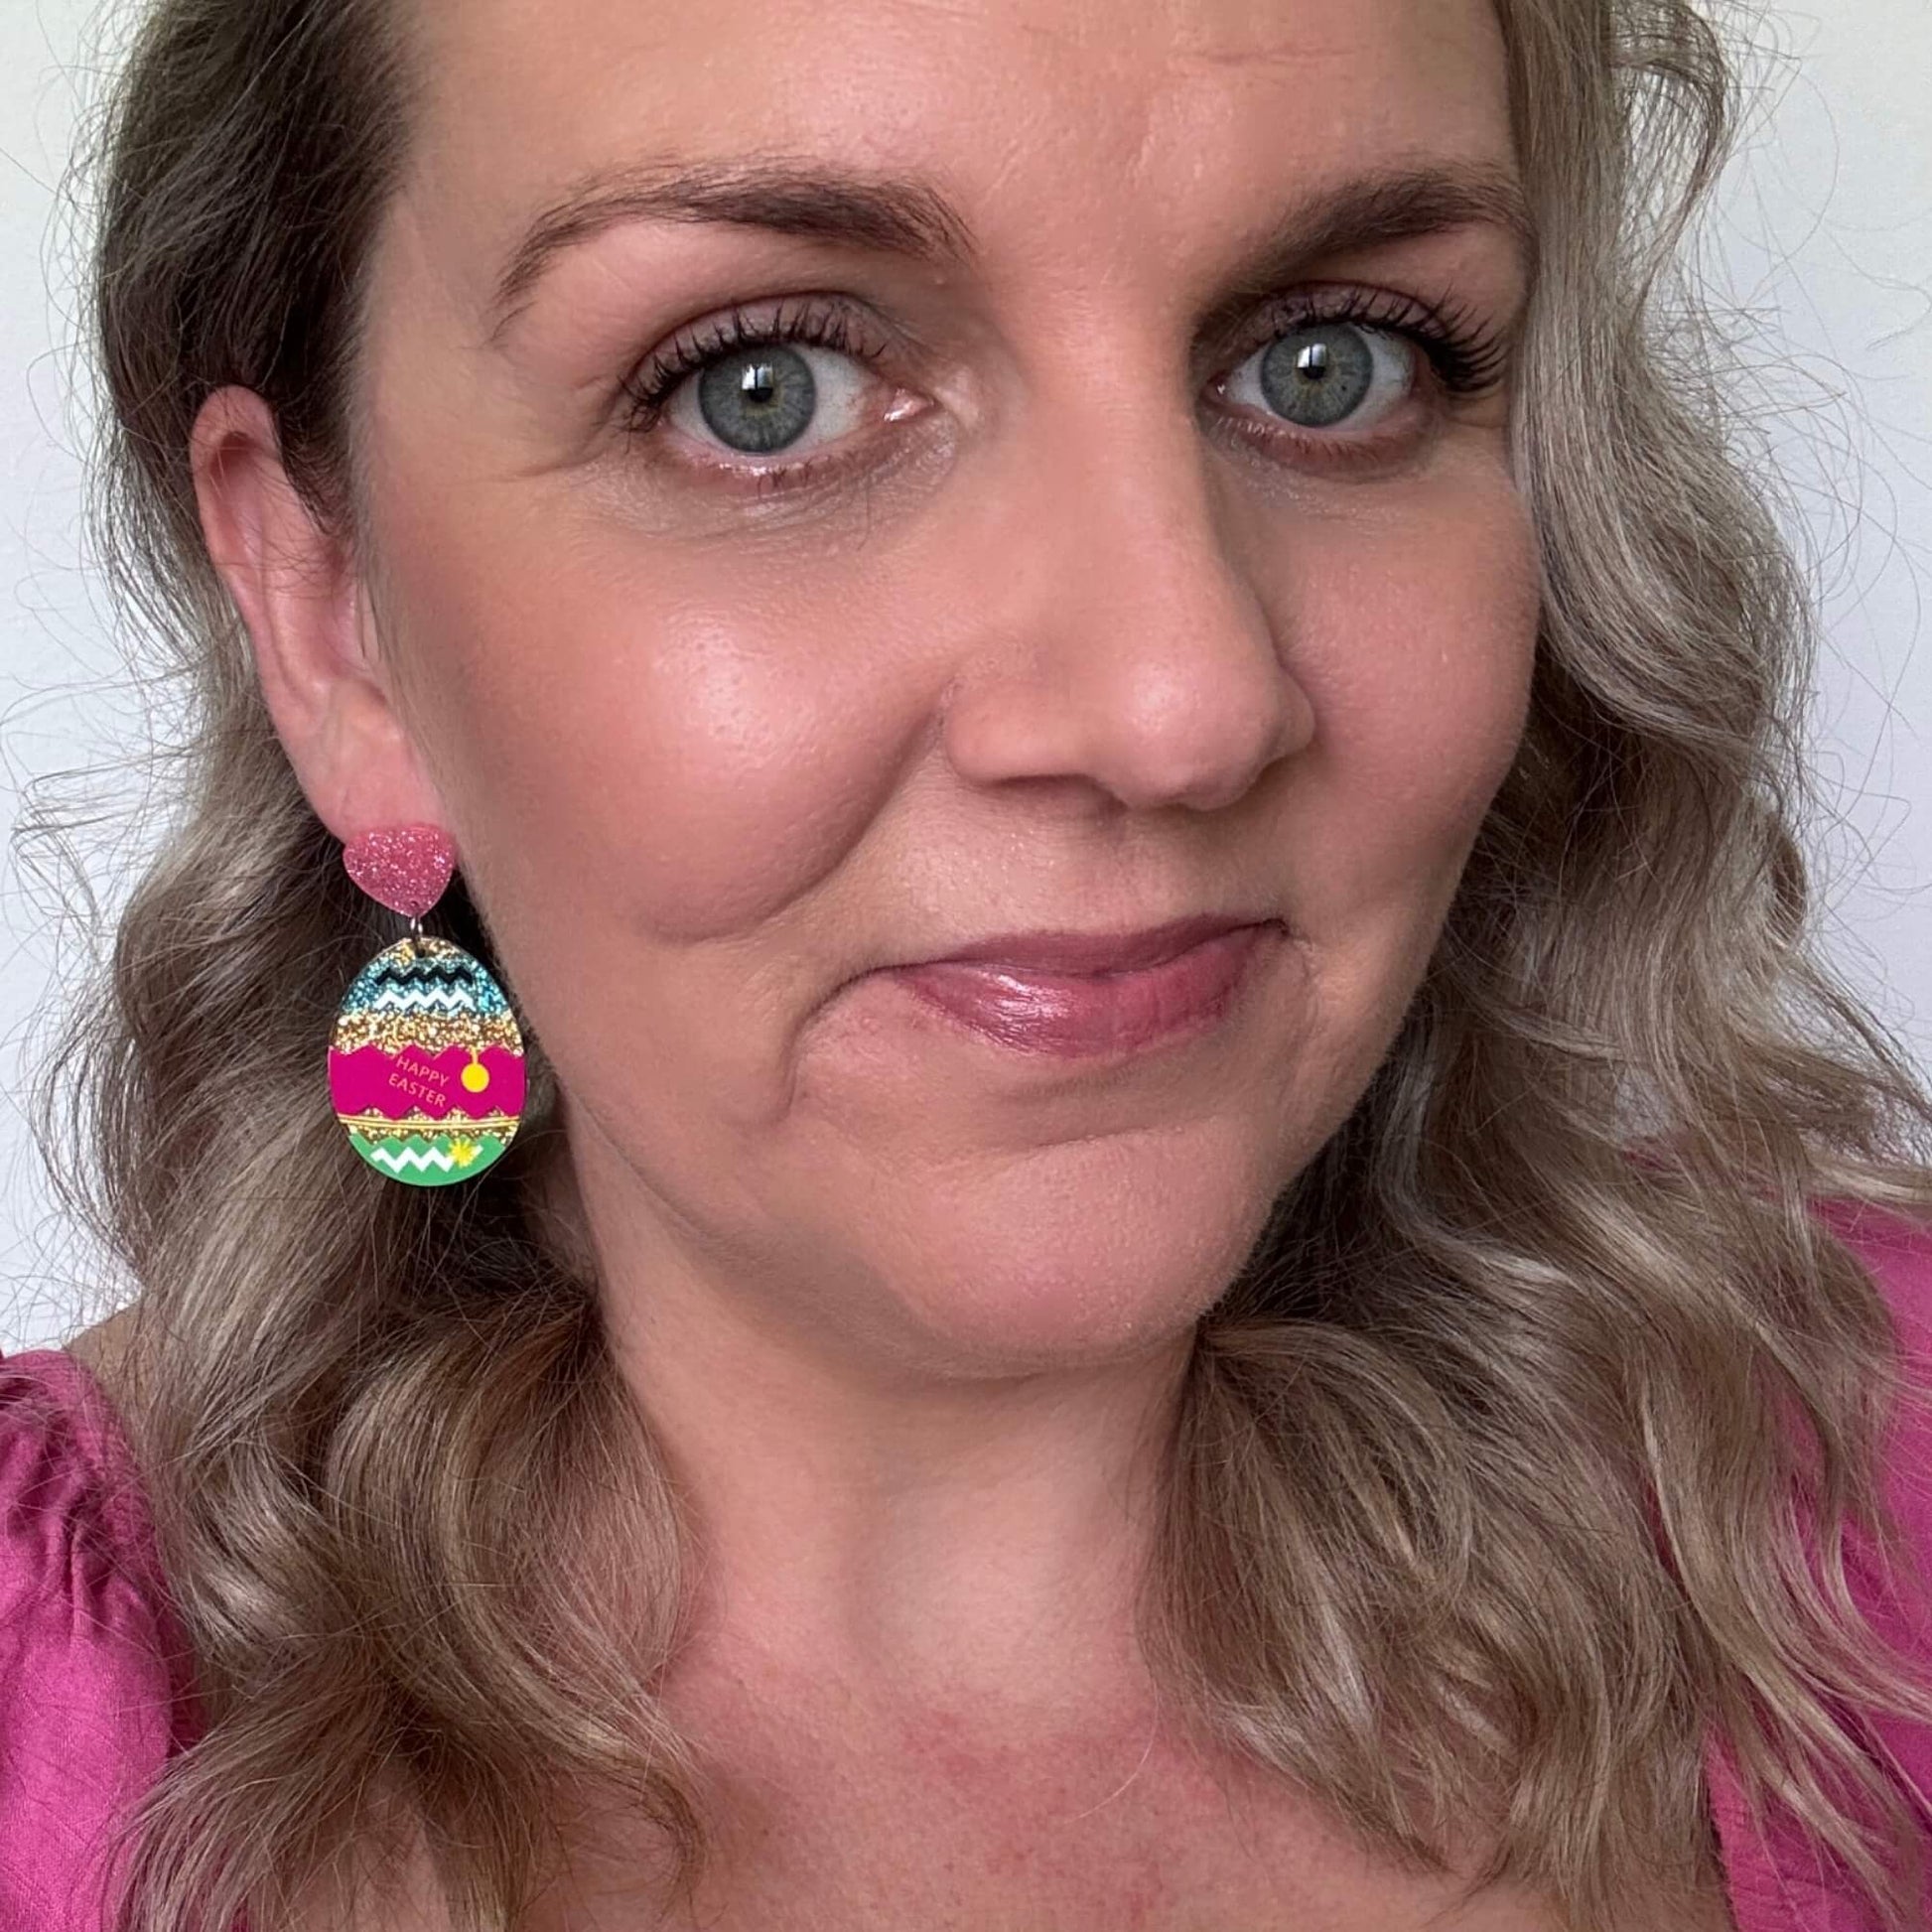 easter egg acrylic stud earrings selfie